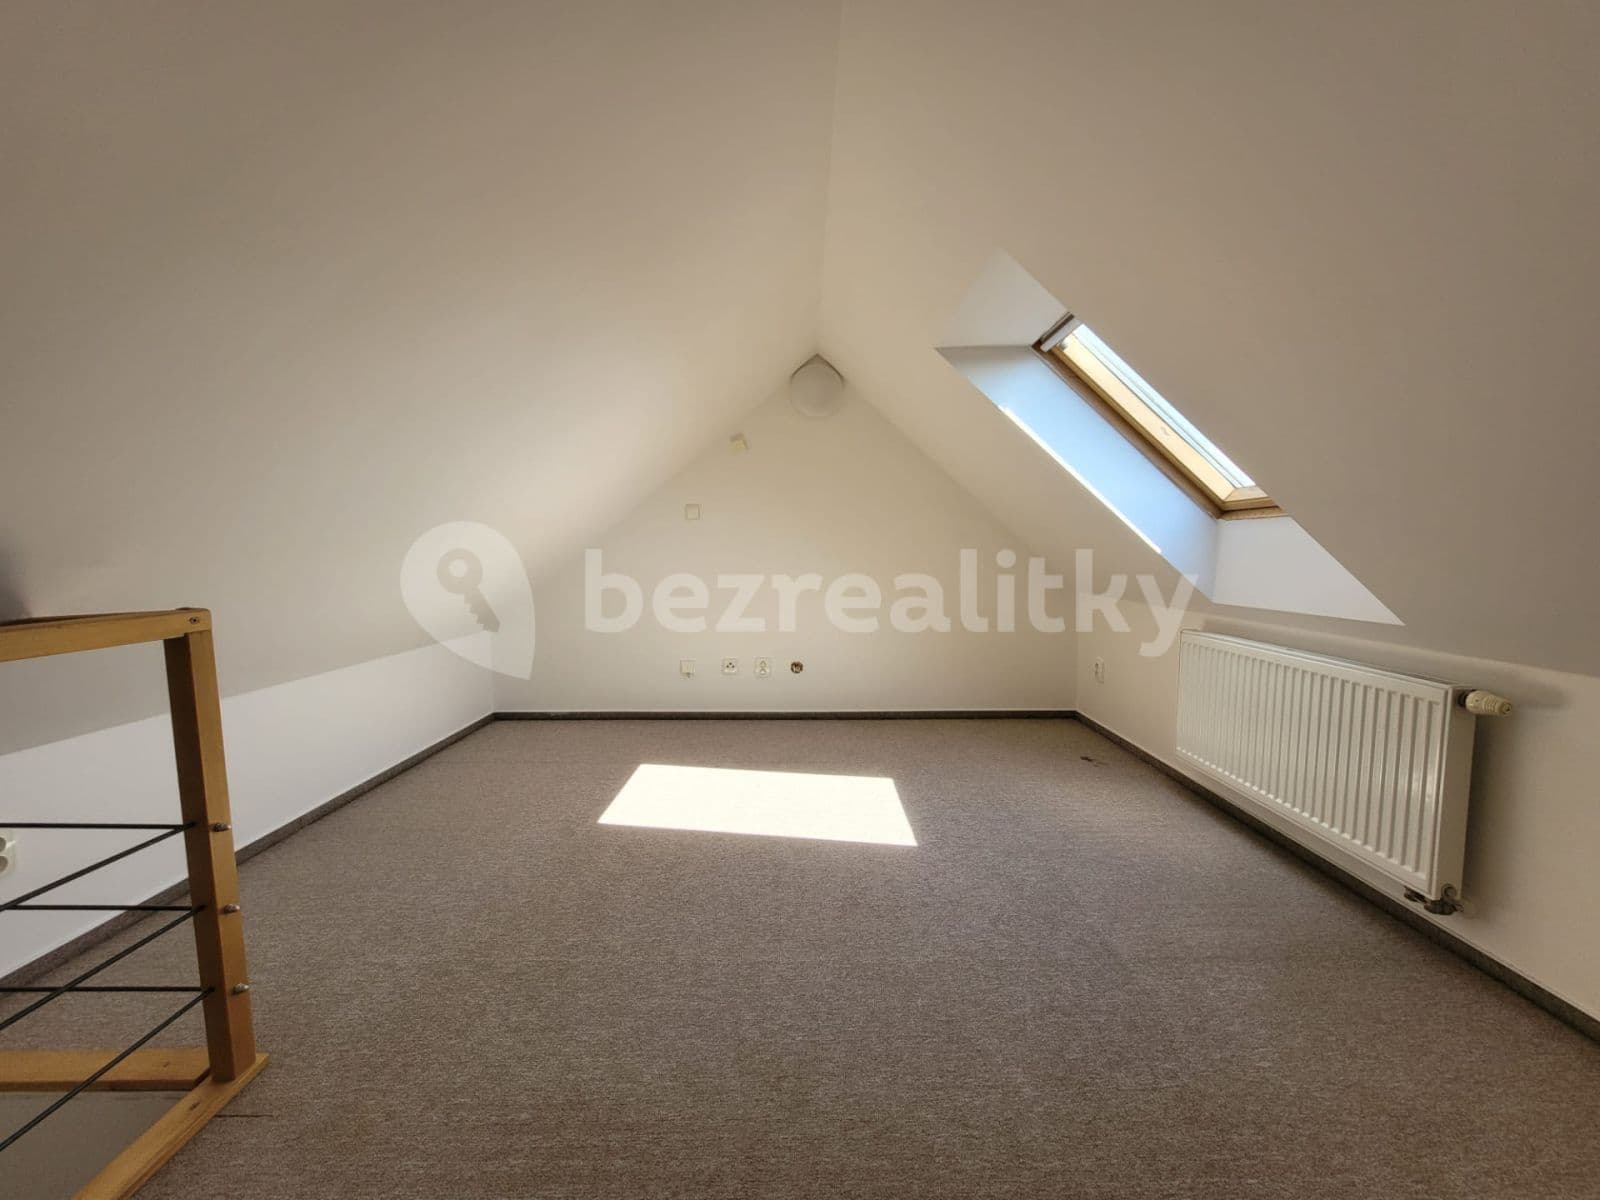 3 bedroom flat to rent, 65 m², Havlovská, Prague, Prague